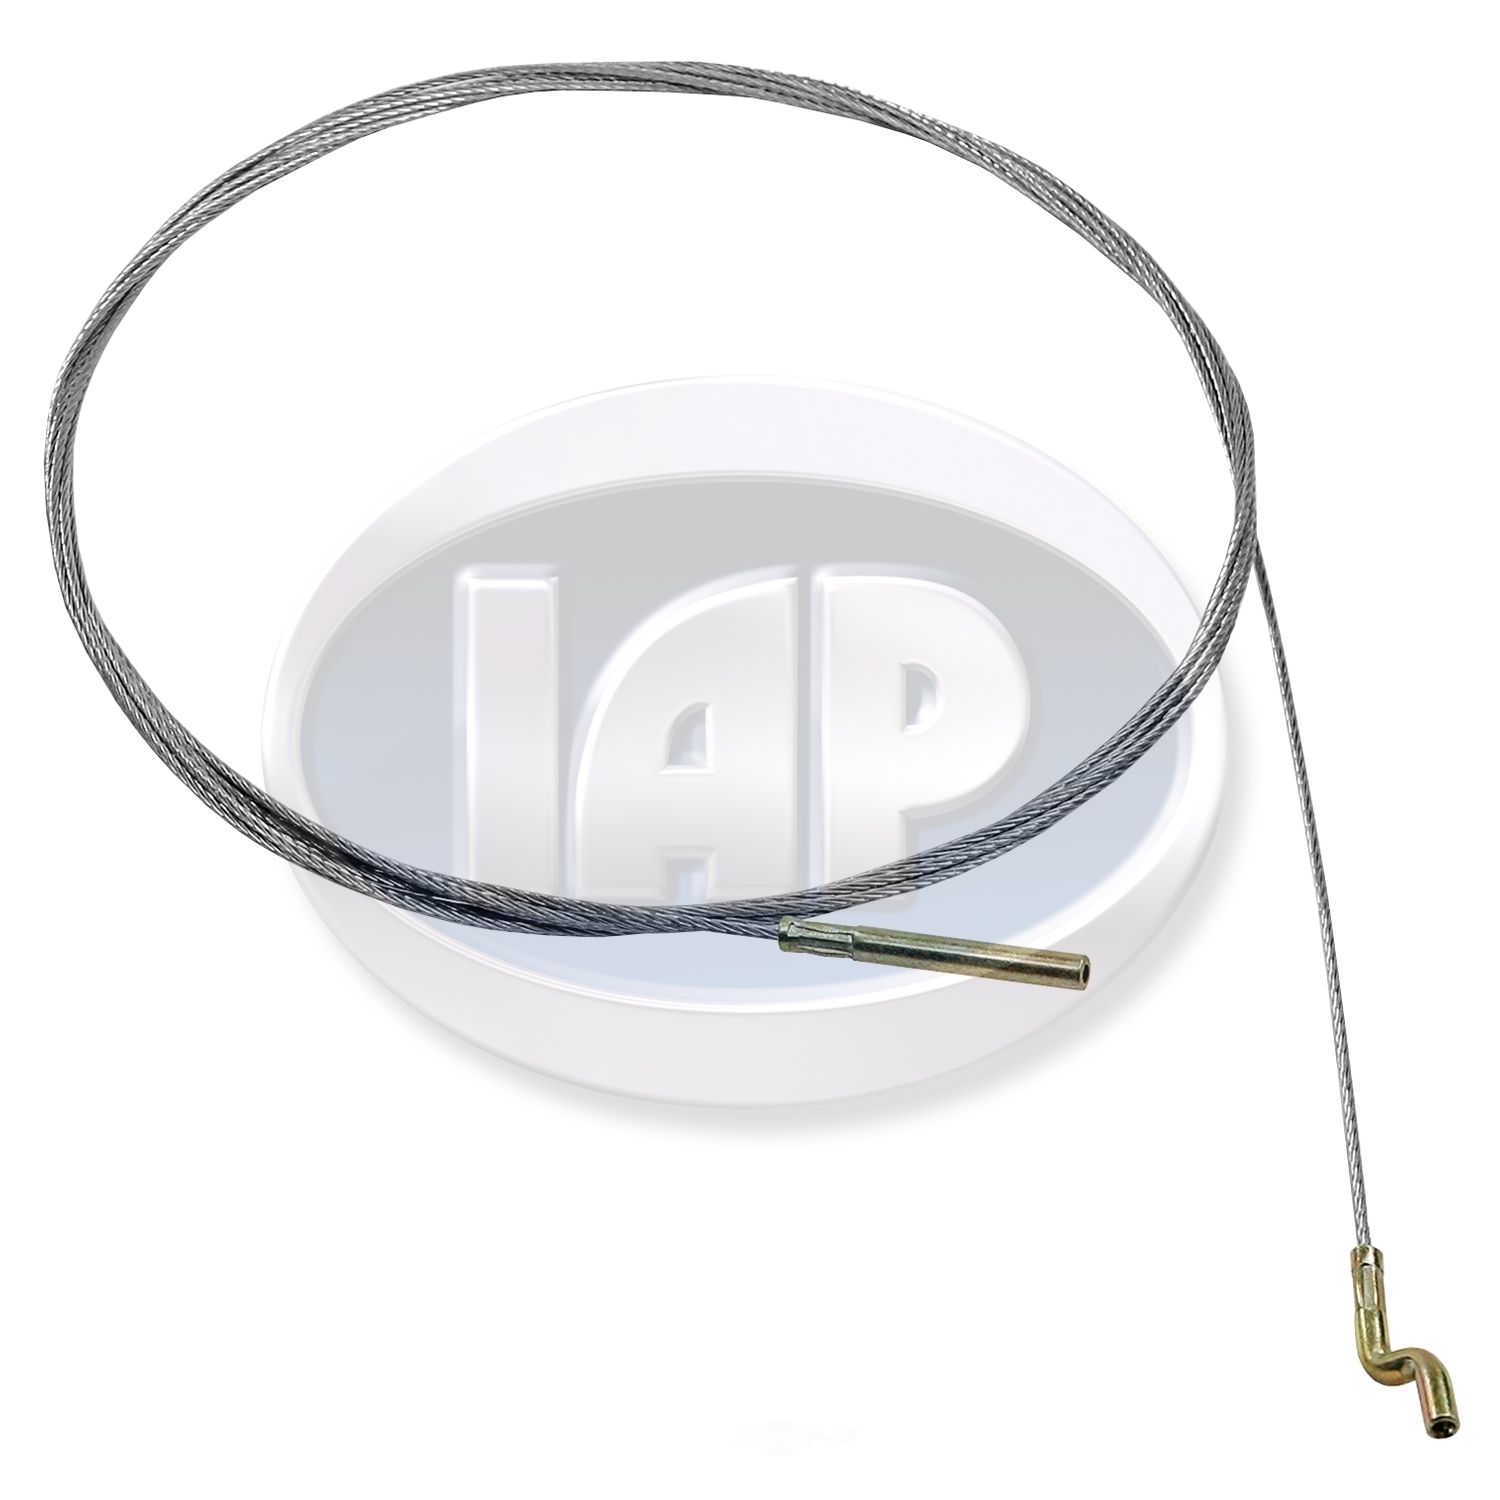 IAP/KUHLTEK MOTORWERKS - Carburetor Accelerator Cable - KMS 111721555J